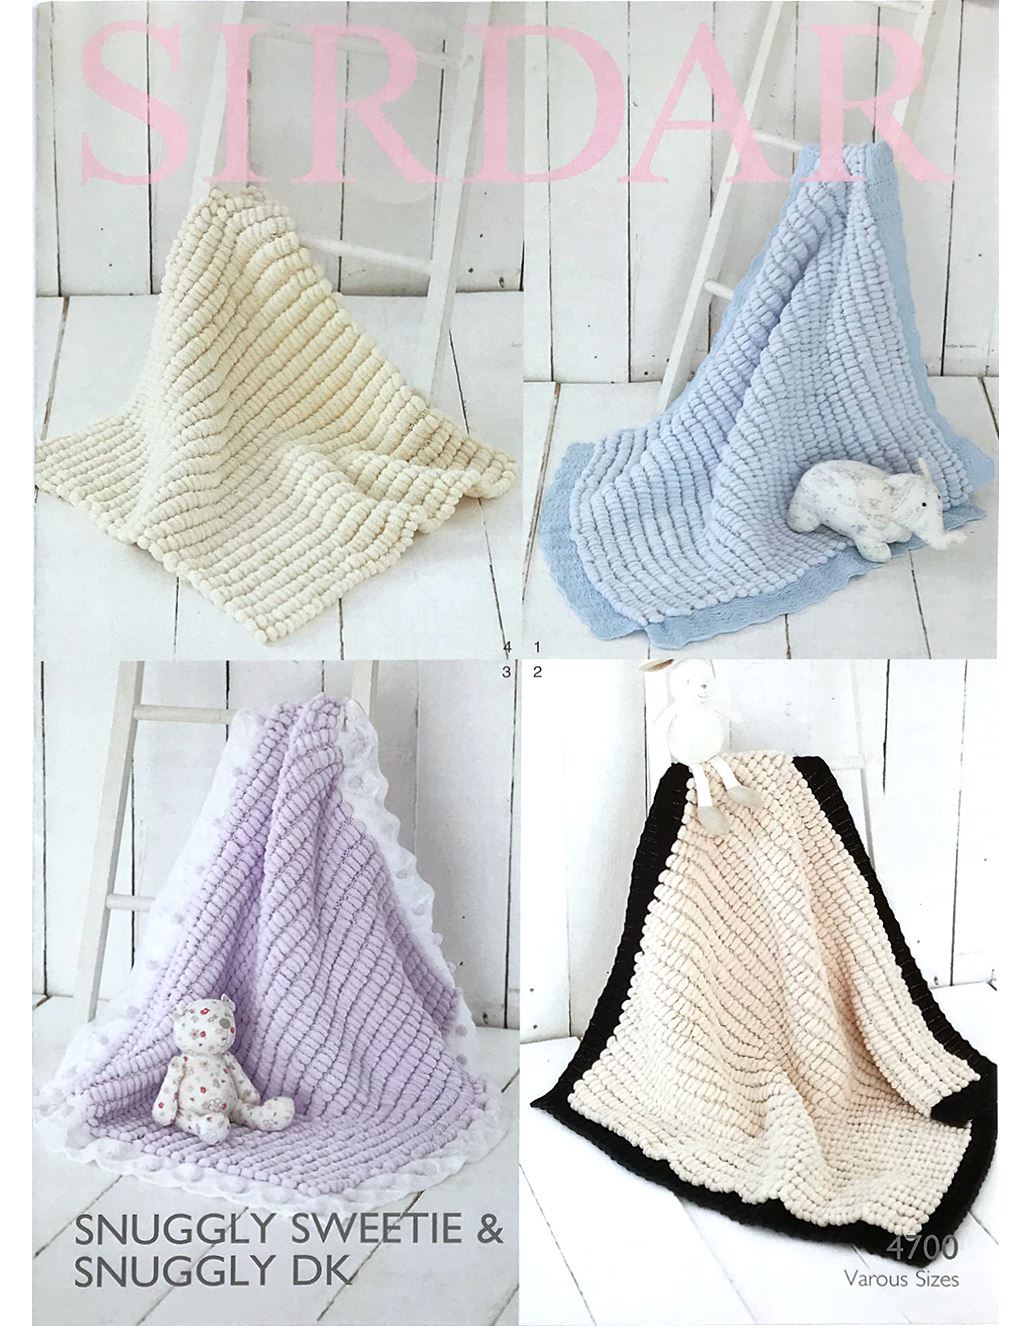 Sirdar Snuggly Sweetie knitting pattern (4700) - blankets